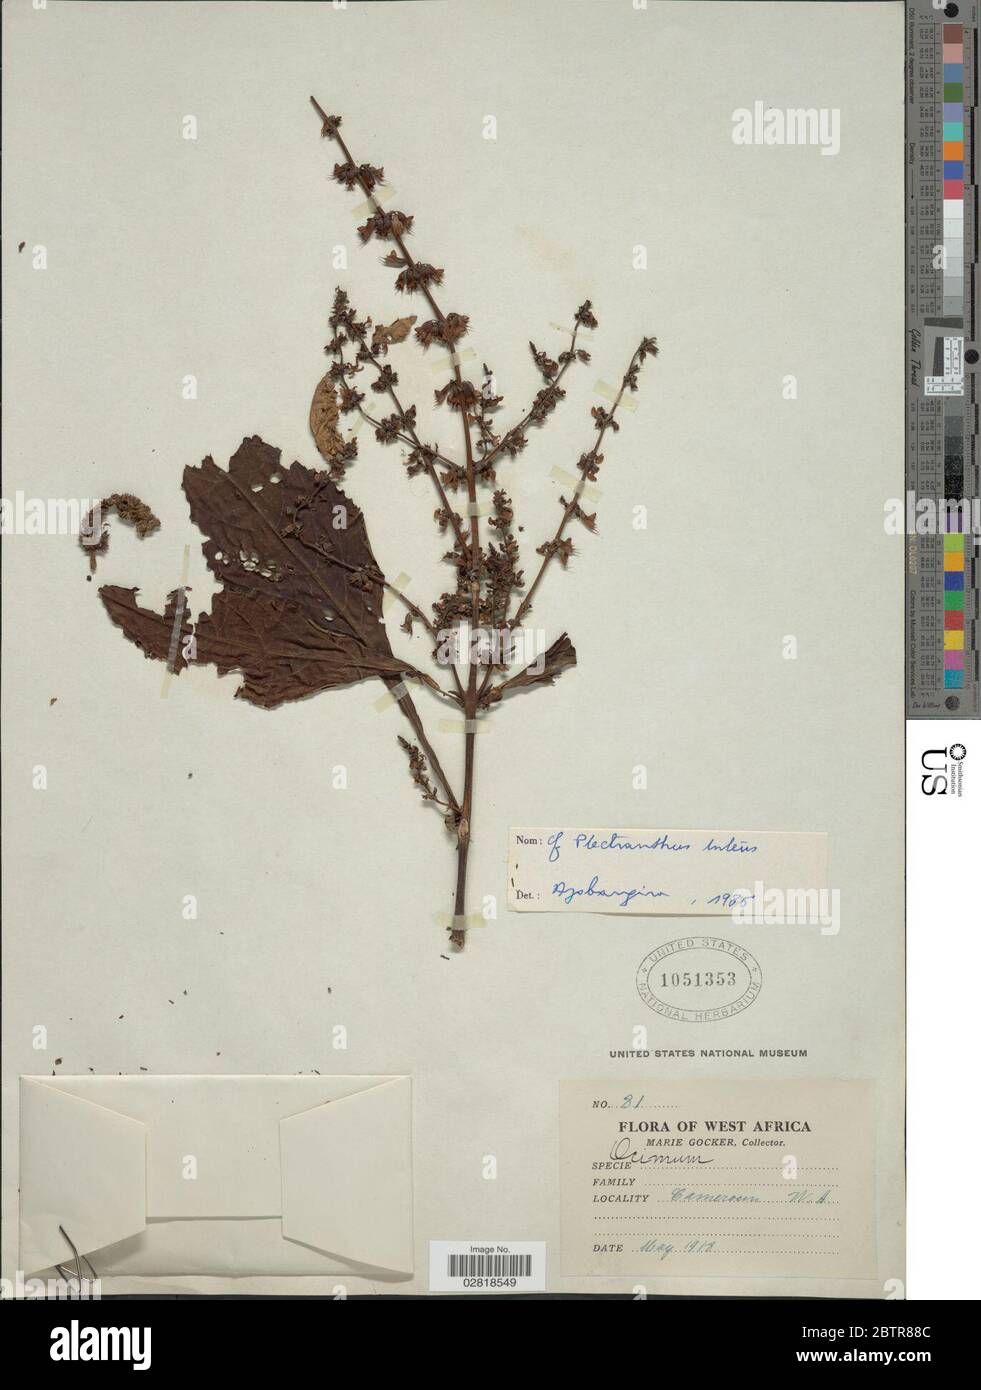 Plectranthus luteus Grke. Stock Photo